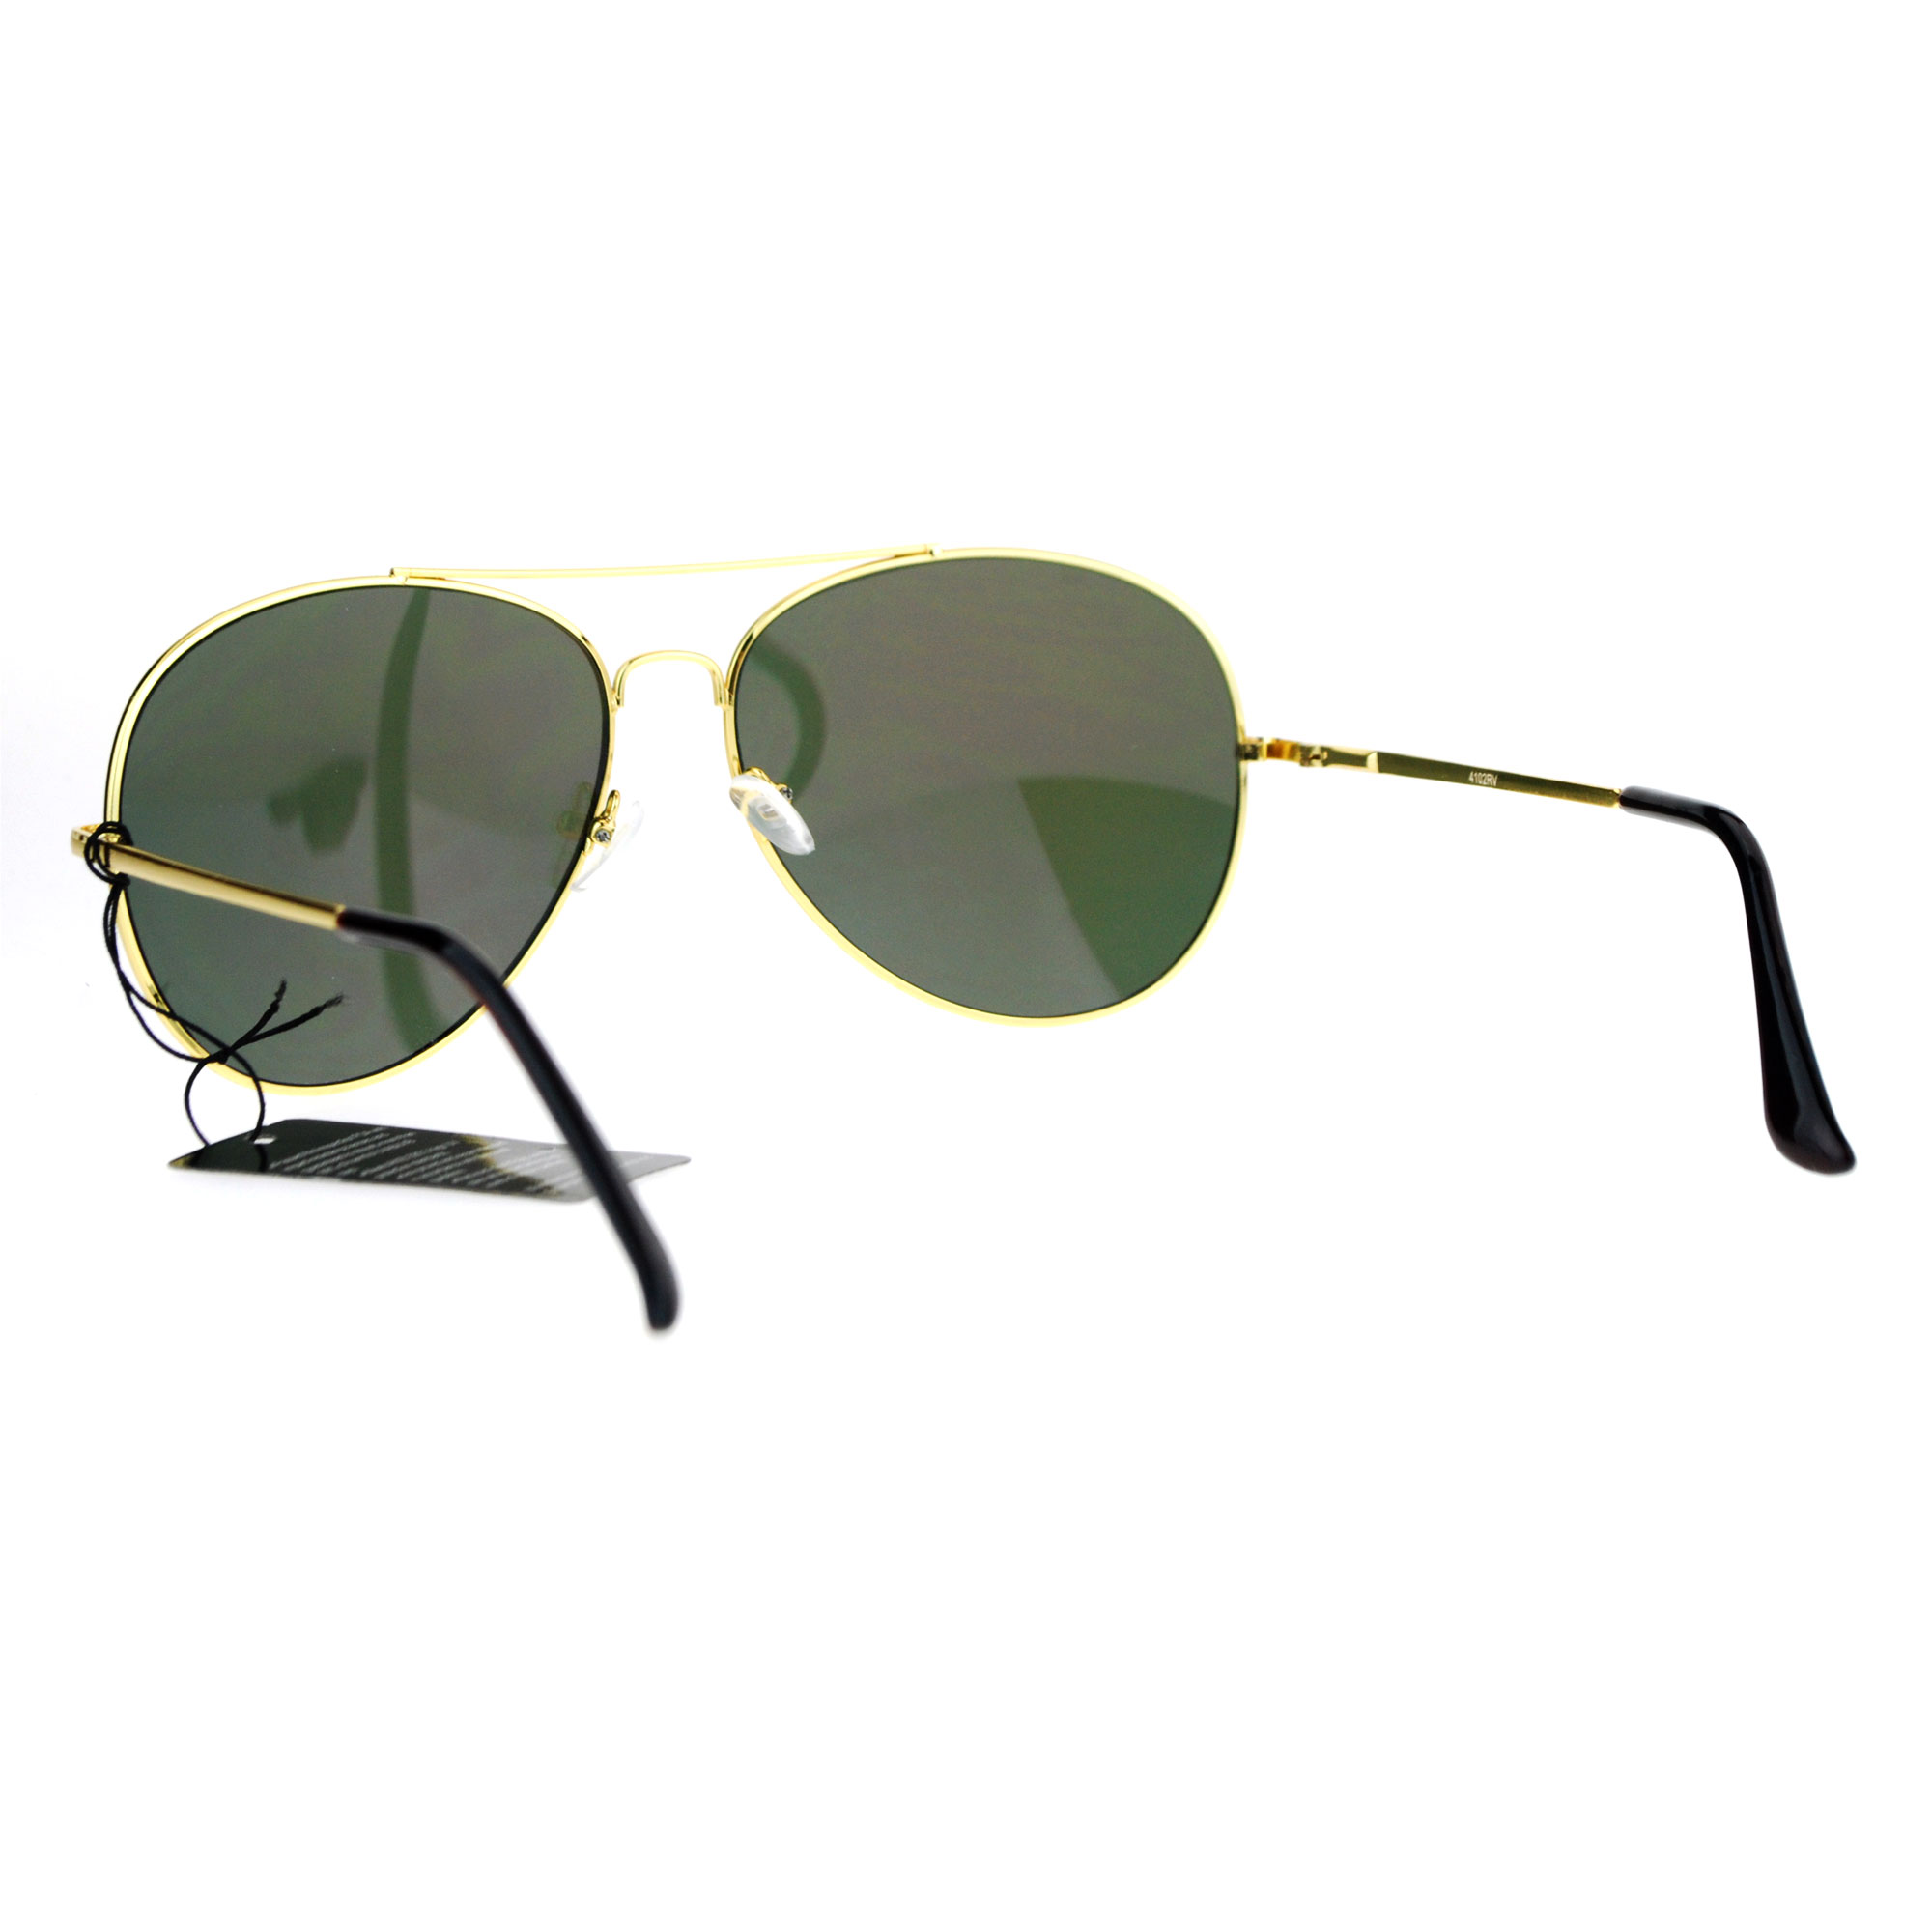 Sa106 Mens Color Mirror Retro Flat Lens Metal Sunglasses Ebay